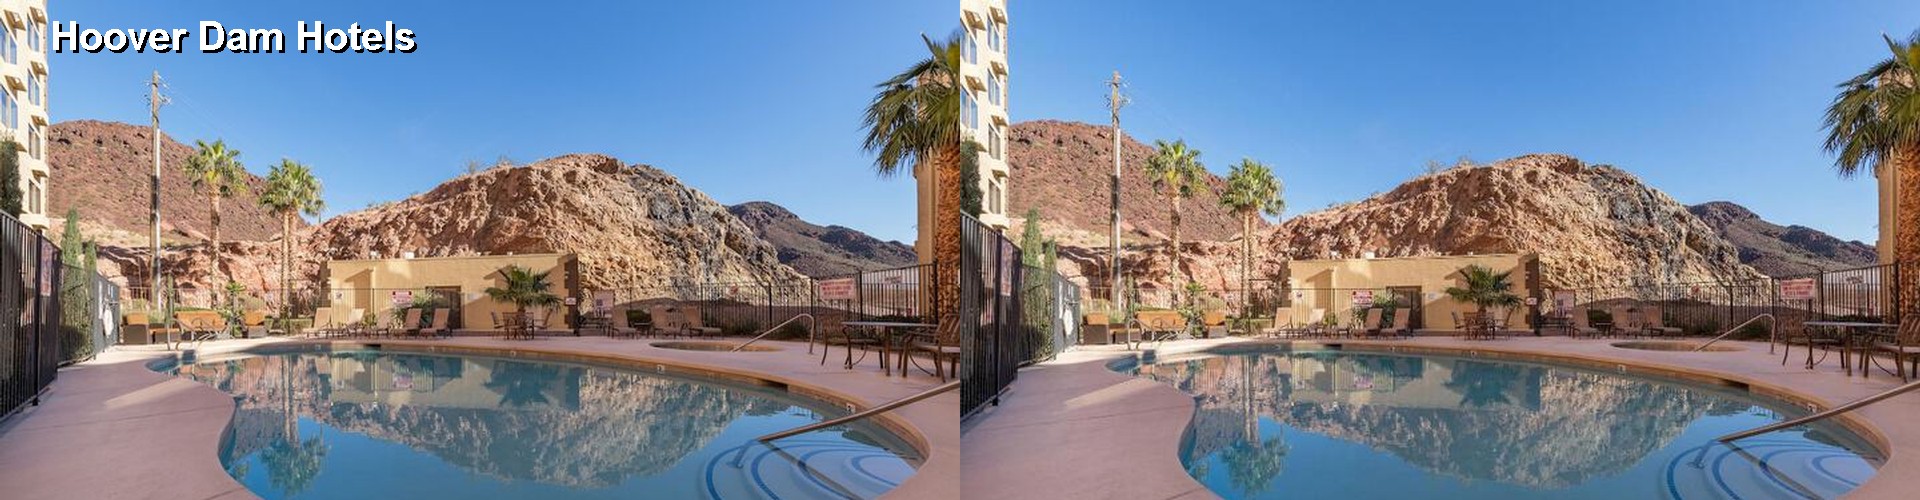 3 Best Hotels near Hoover Dam